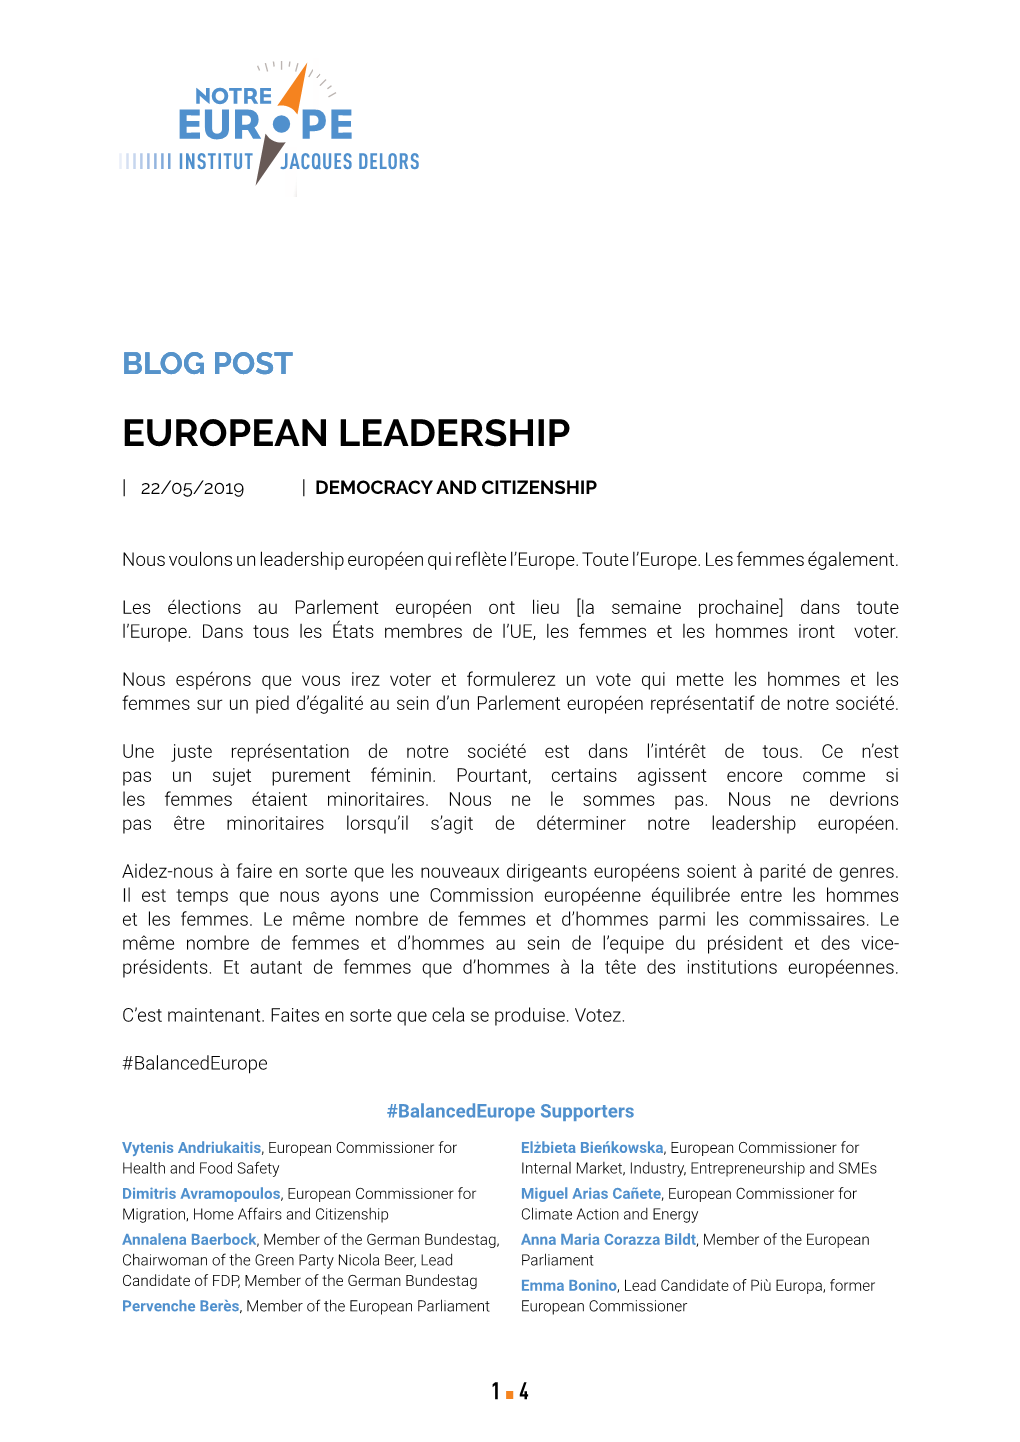 European Leadership